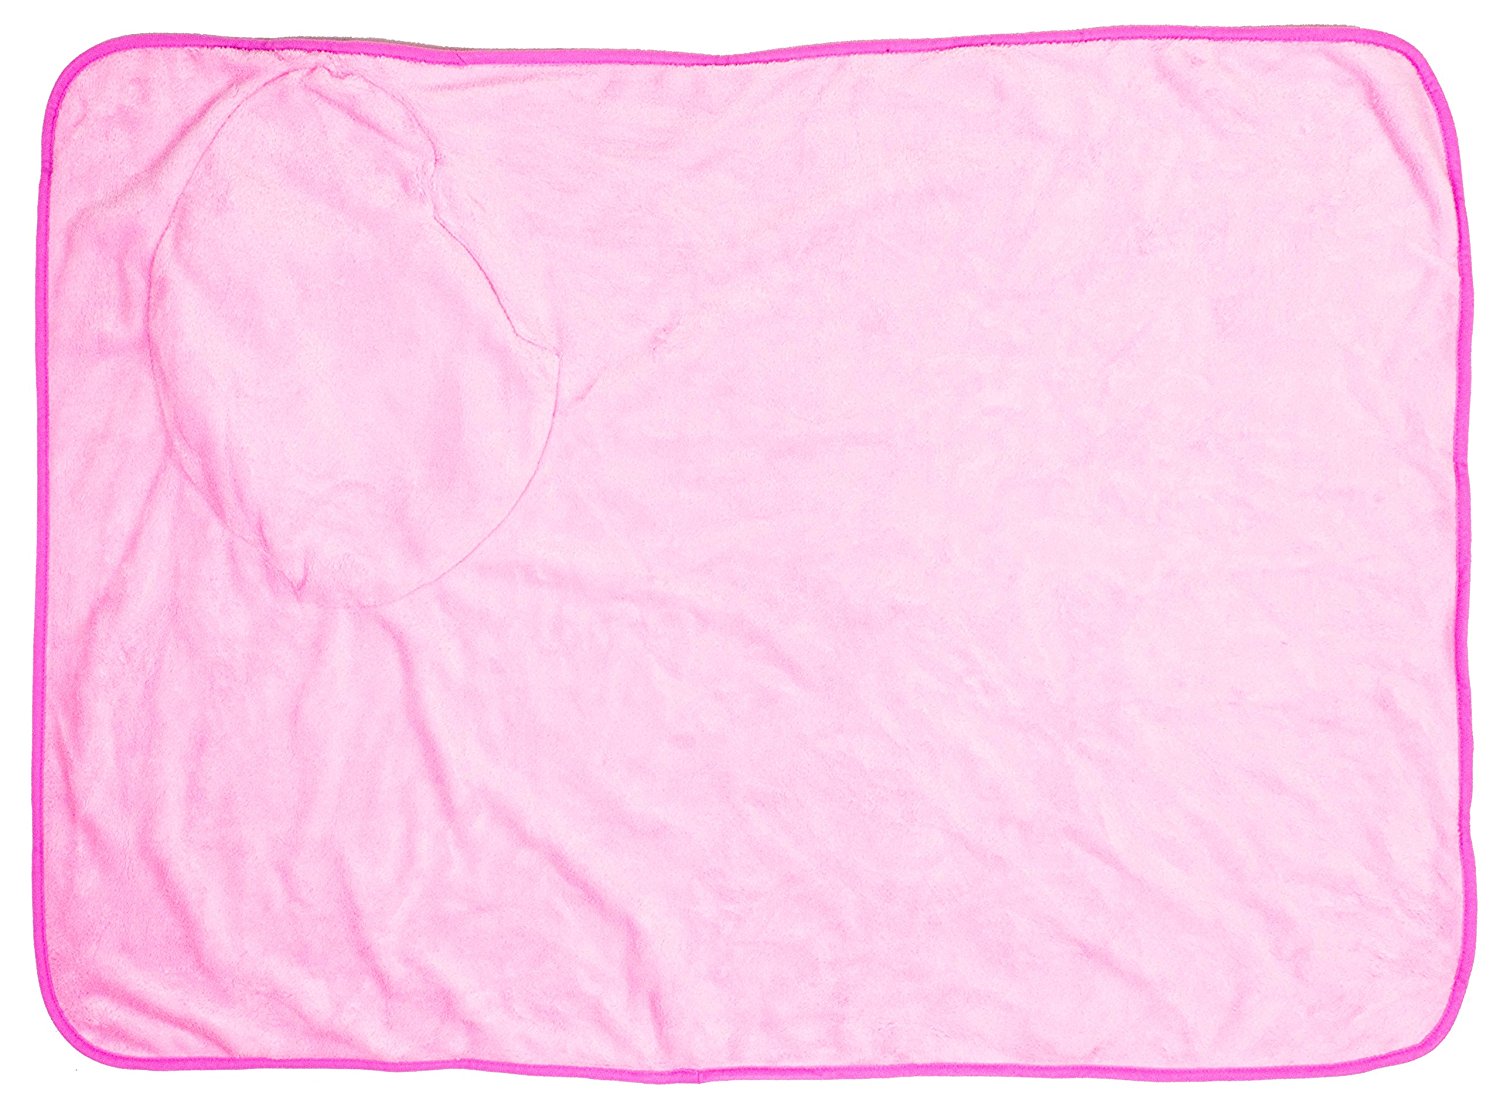 Peppa Pig 'Oink' Travel Blanket Rotary Fleece Throw